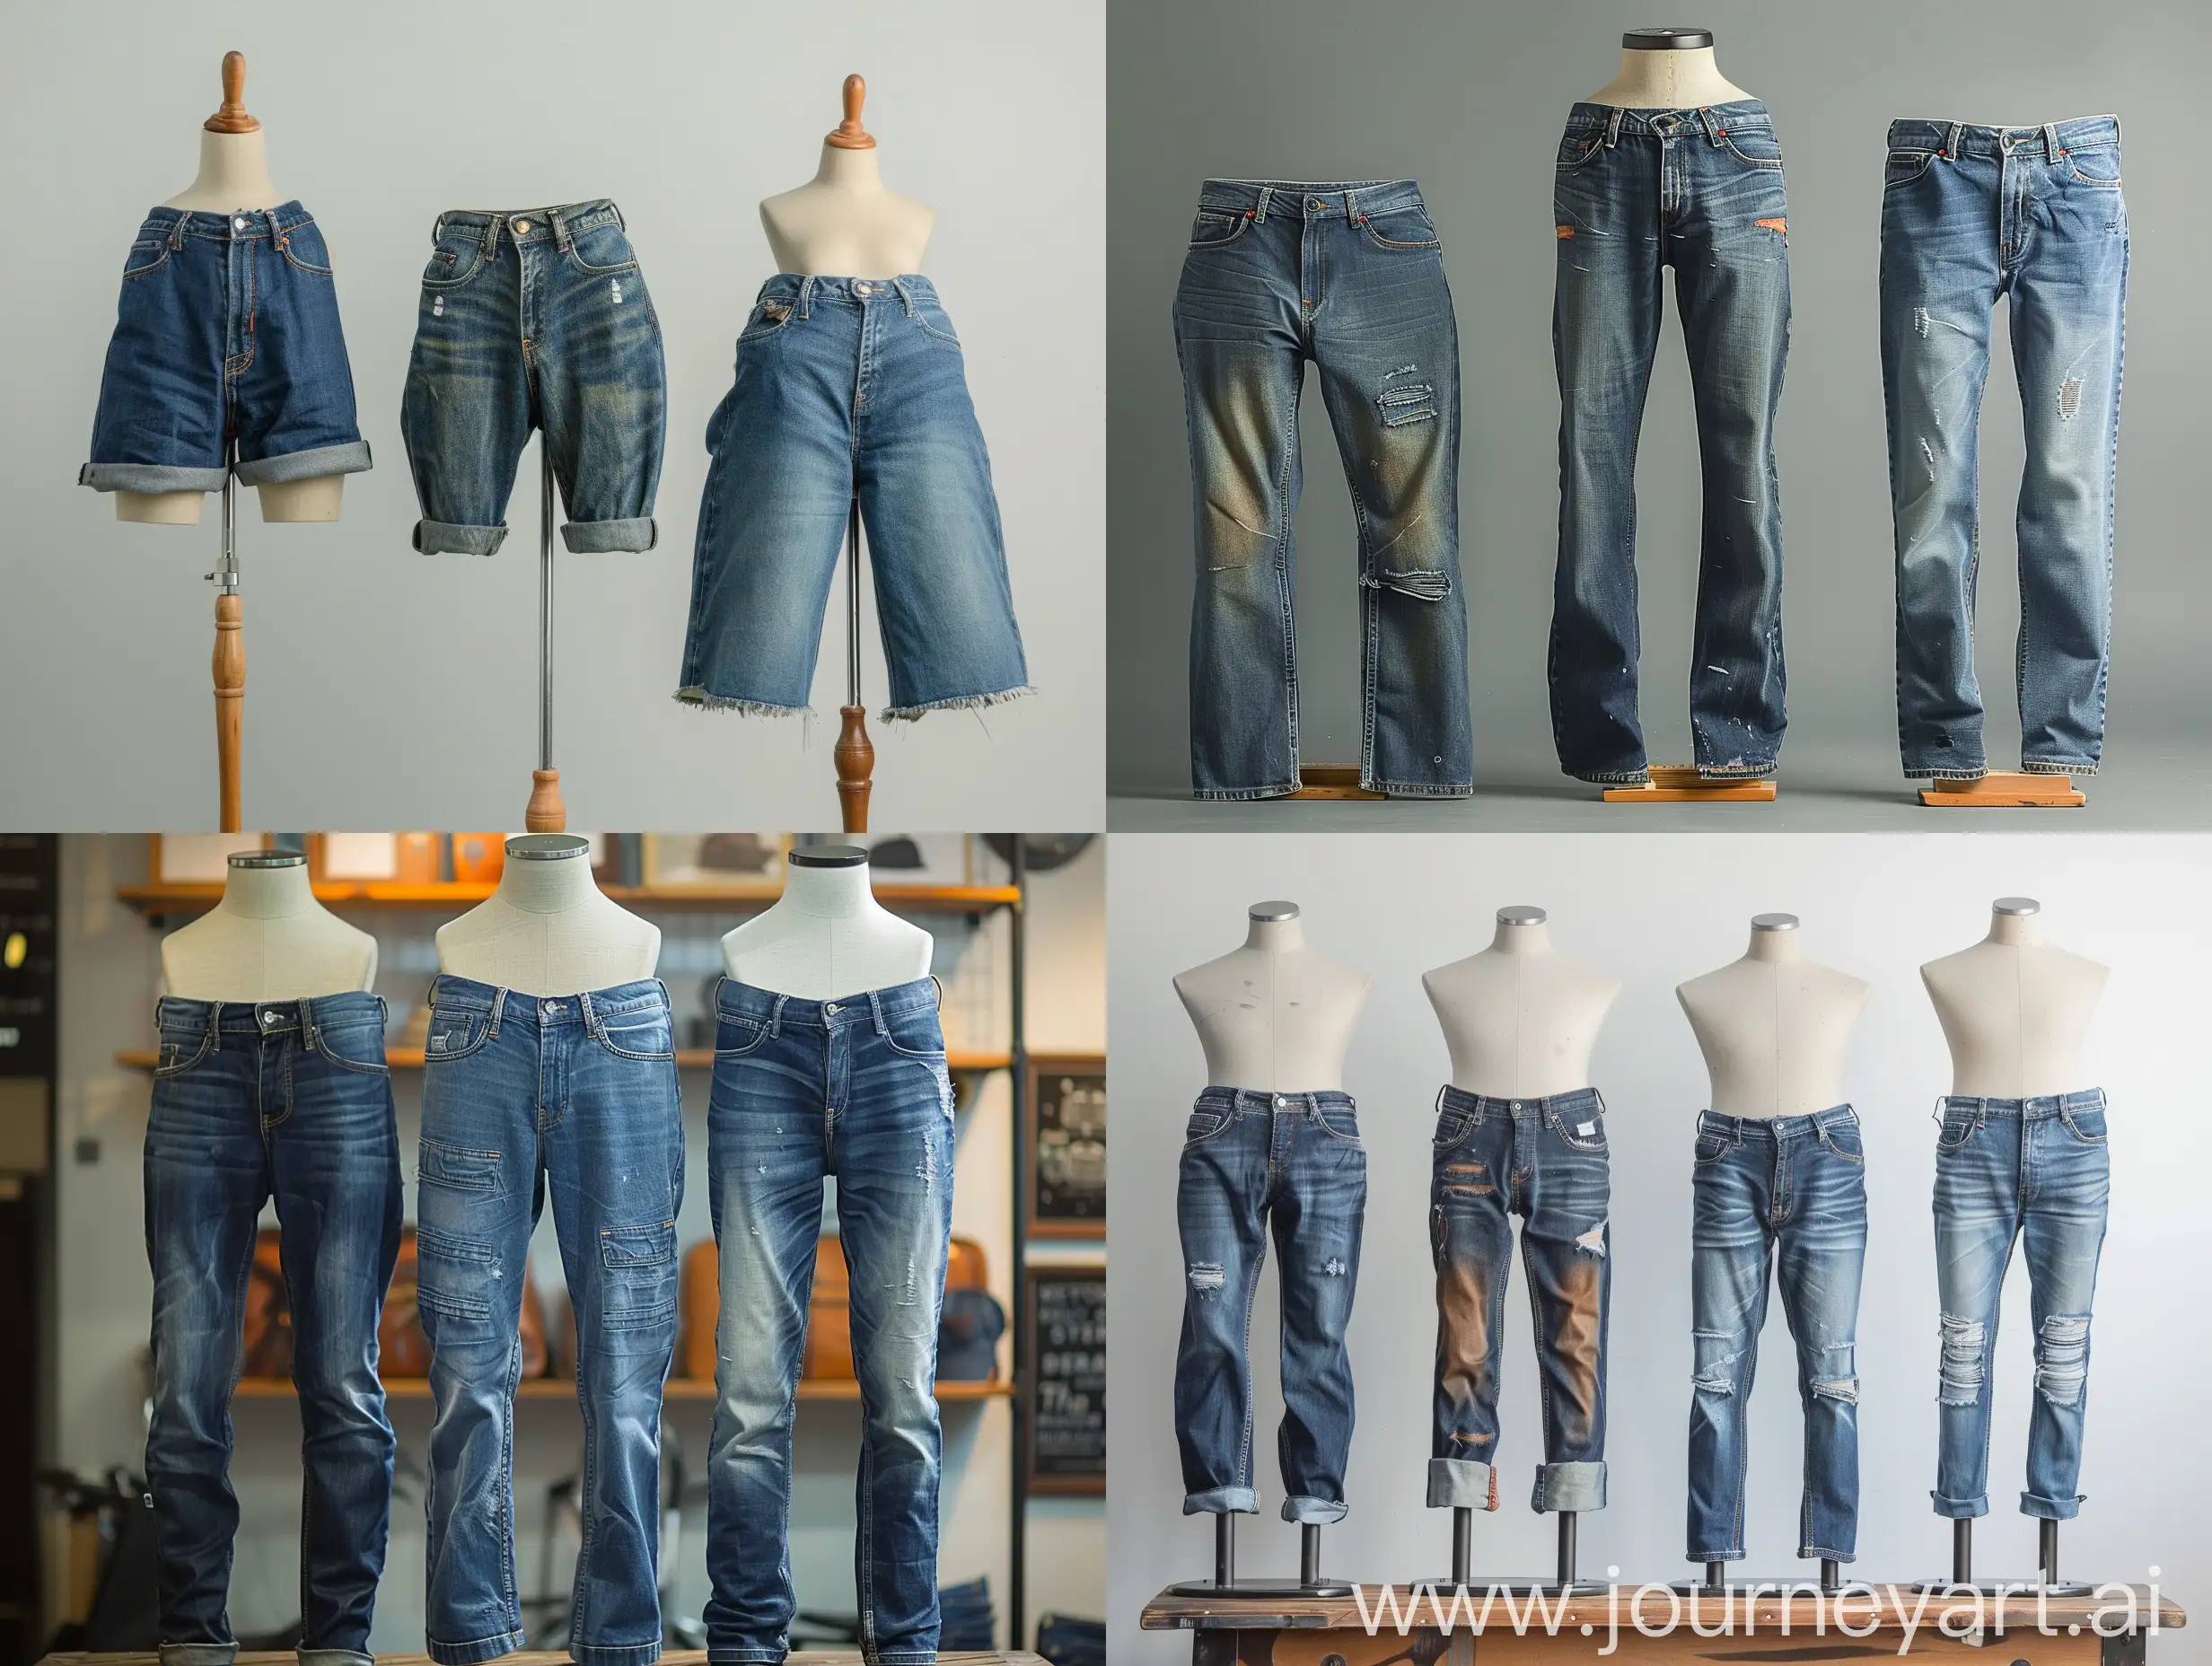 Variety-of-Denim-Jeans-Displayed-on-Mannequin